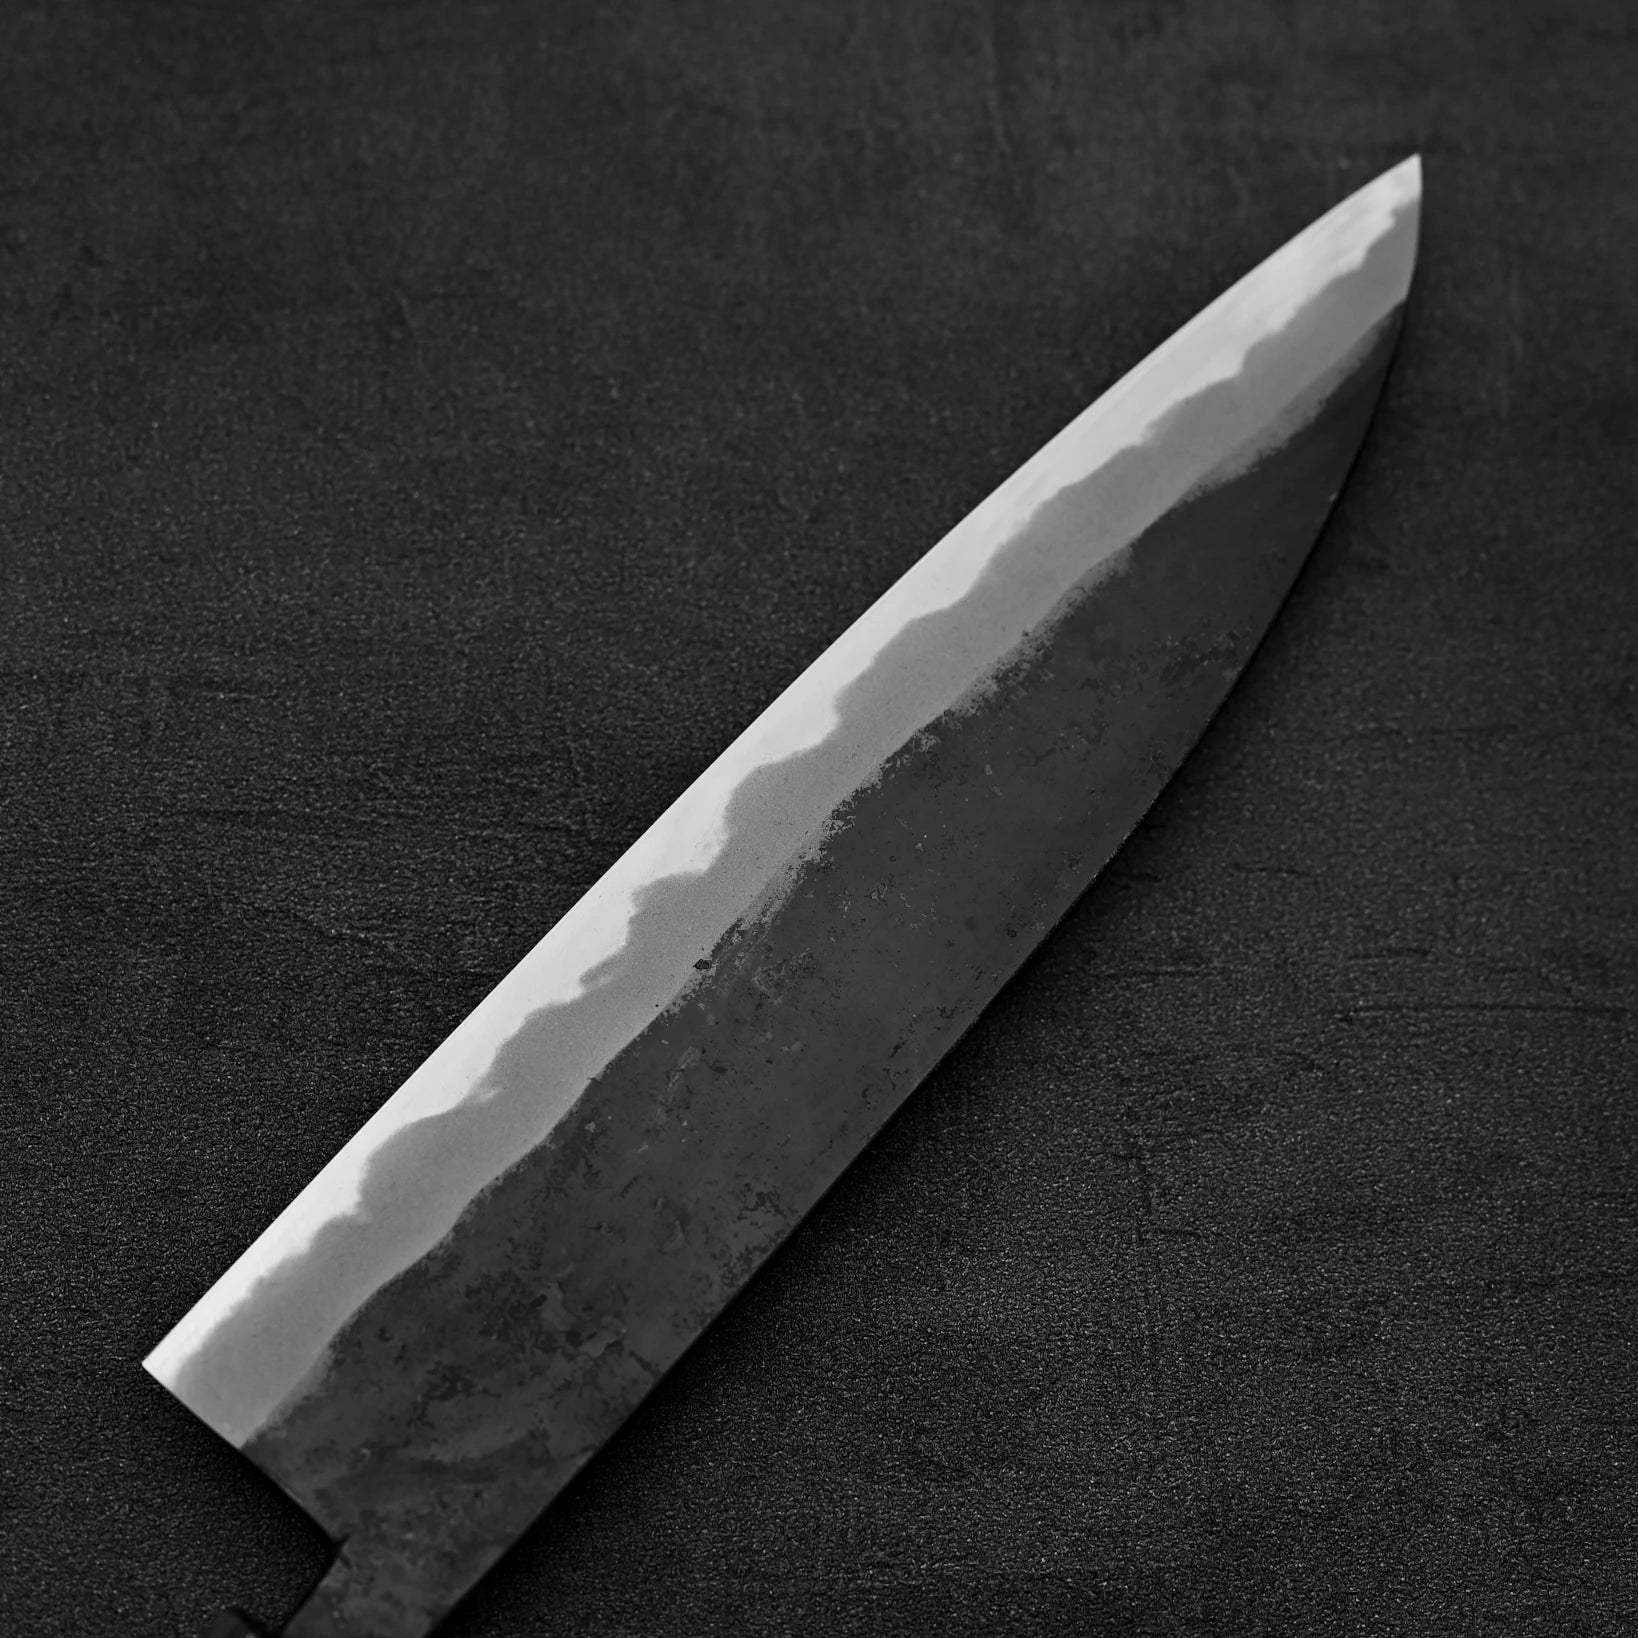 Back side view of the blade of Hinokuni kurouchi shirogami#1 gyuto knife